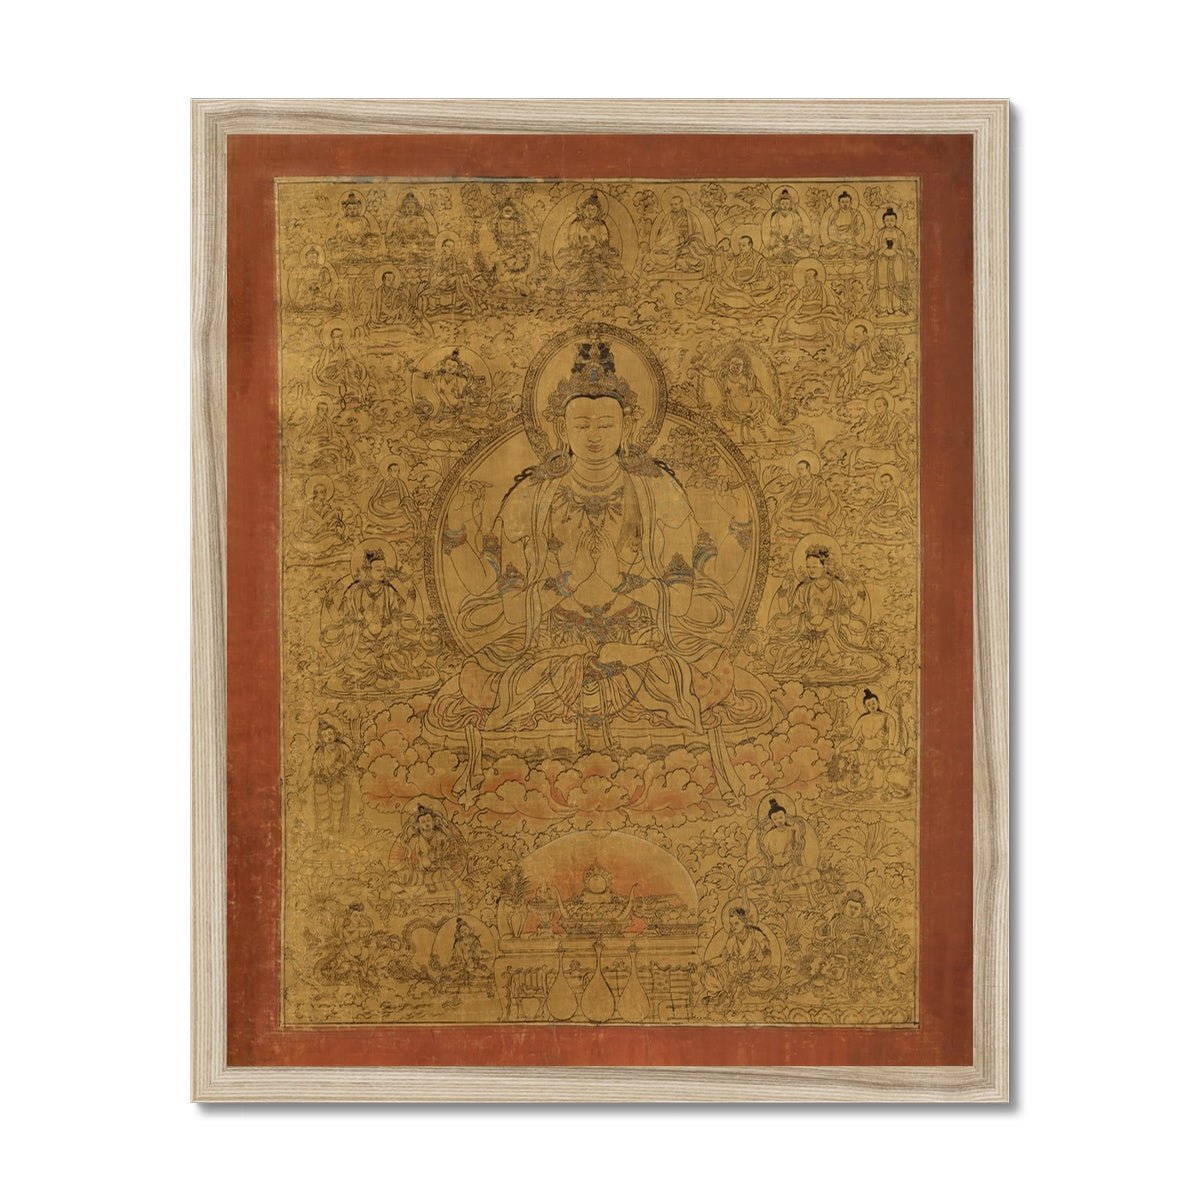 Fine art 6"x8" / Natural Frame Framed Avalokiteshvara Buddha of Compassion | Guan Yin, Kuan Yin Bodhisattva | Meditation Mindfulness Yoga Framed Art Print